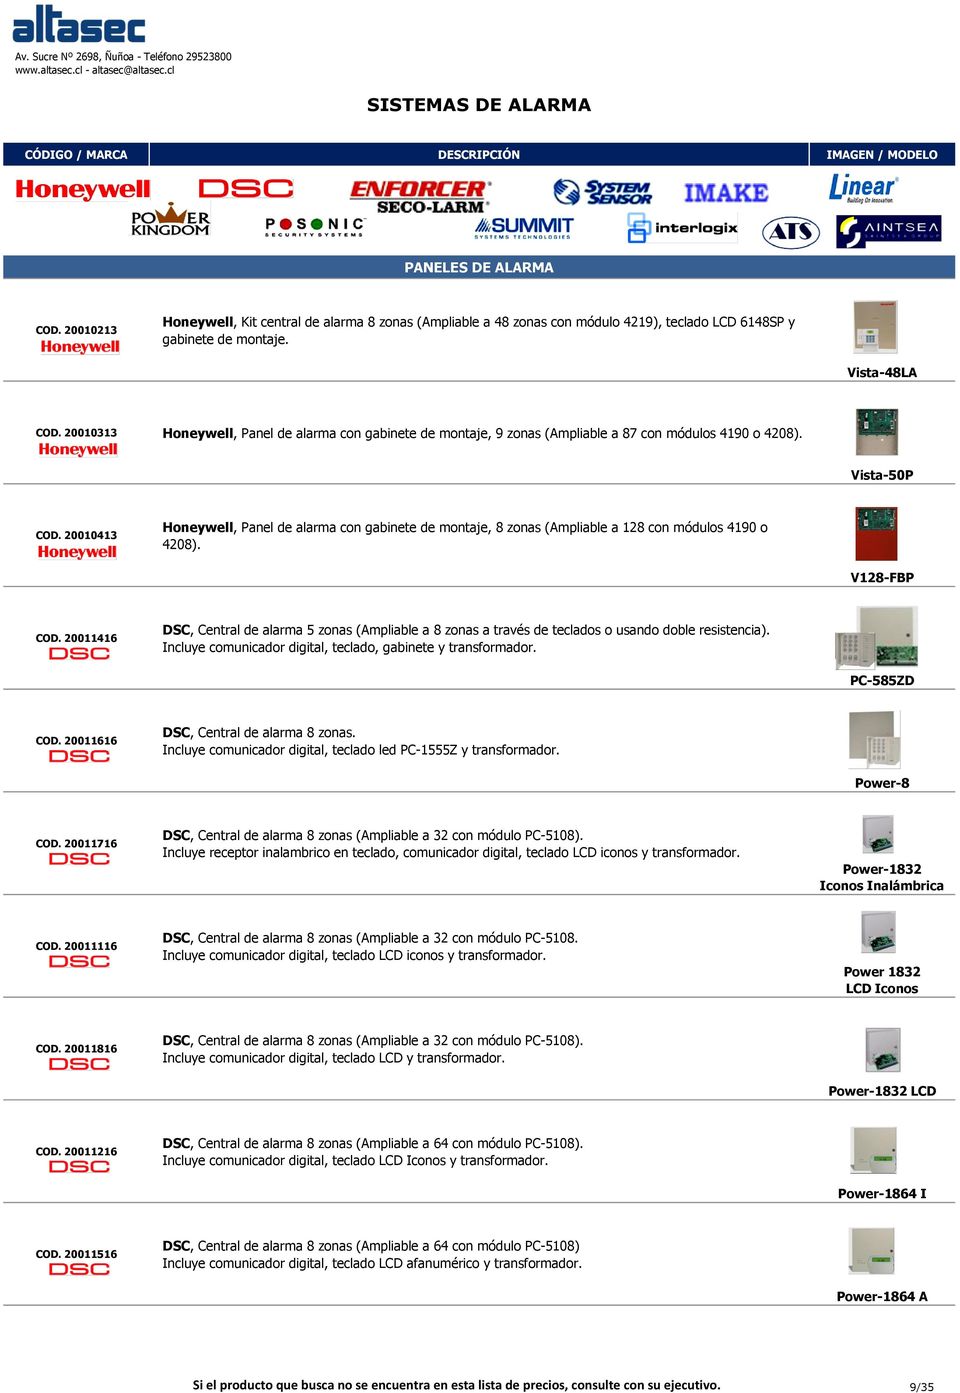 20010413 Honeywell, Panel de alarma con gabinete de montaje, 8 zonas (Ampliable a 128 con módulos 4190 o 4208). V128-FBP COD.